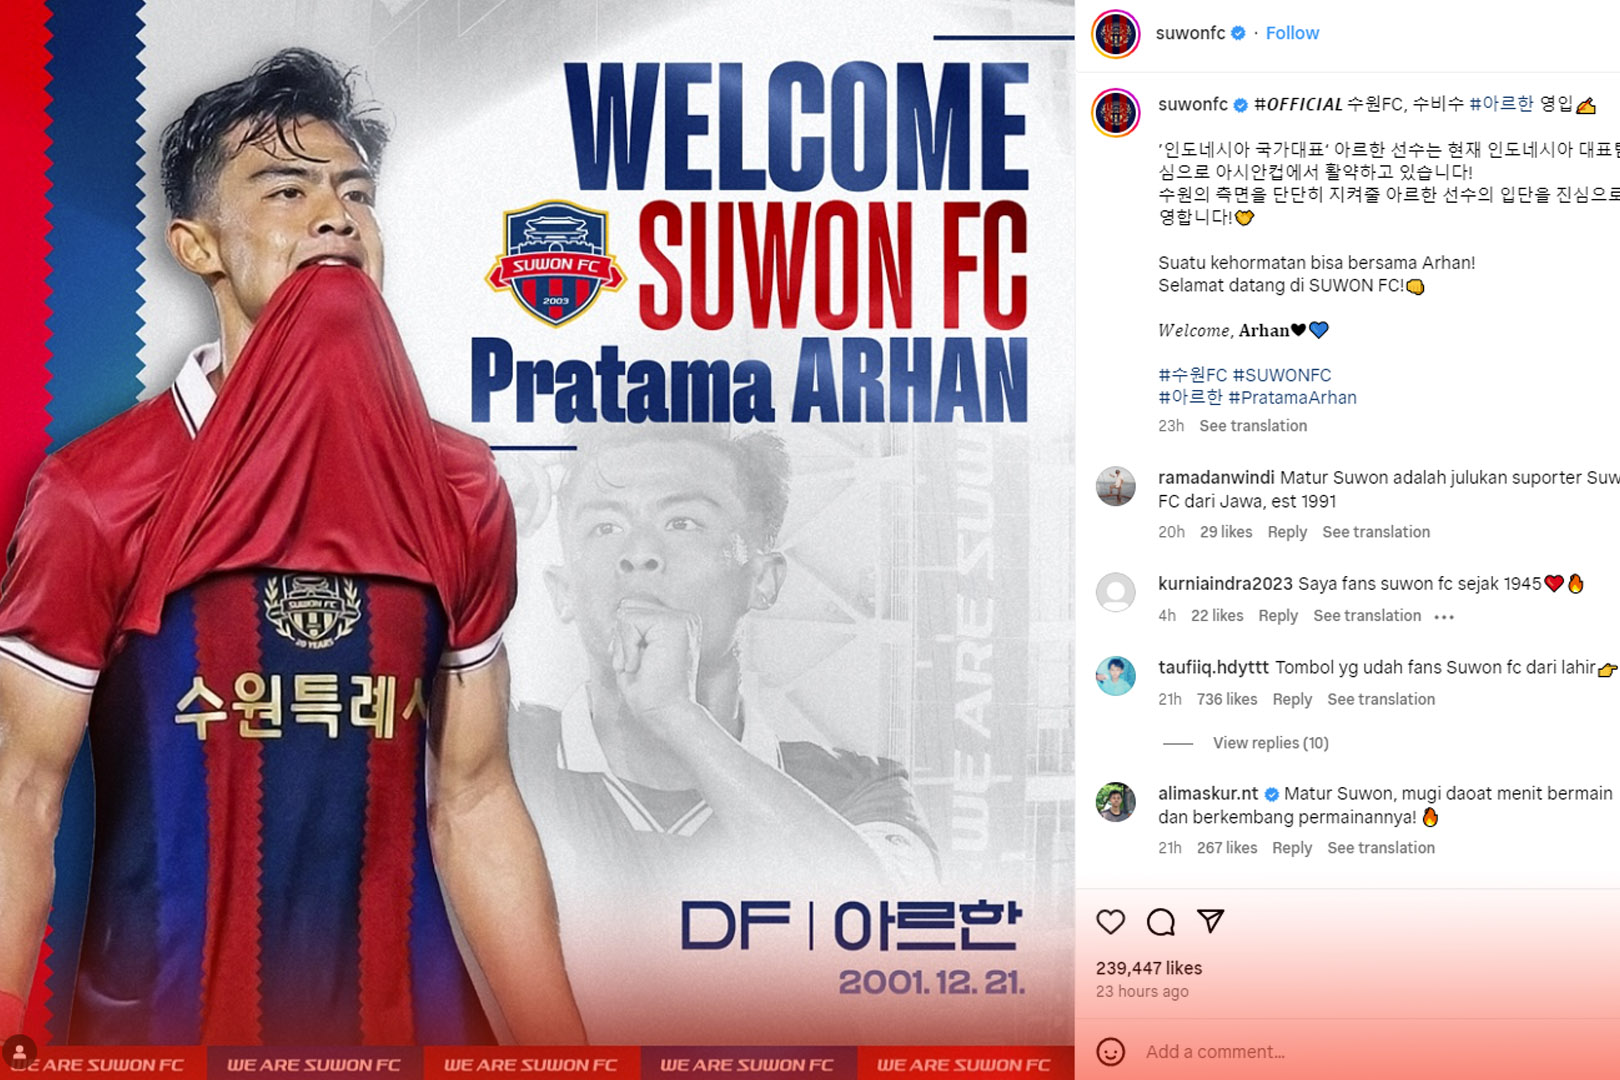 Efek Kedatangan Pratama Arhan, Rekrutan Baru Suwon FC - iMSPORT.TV